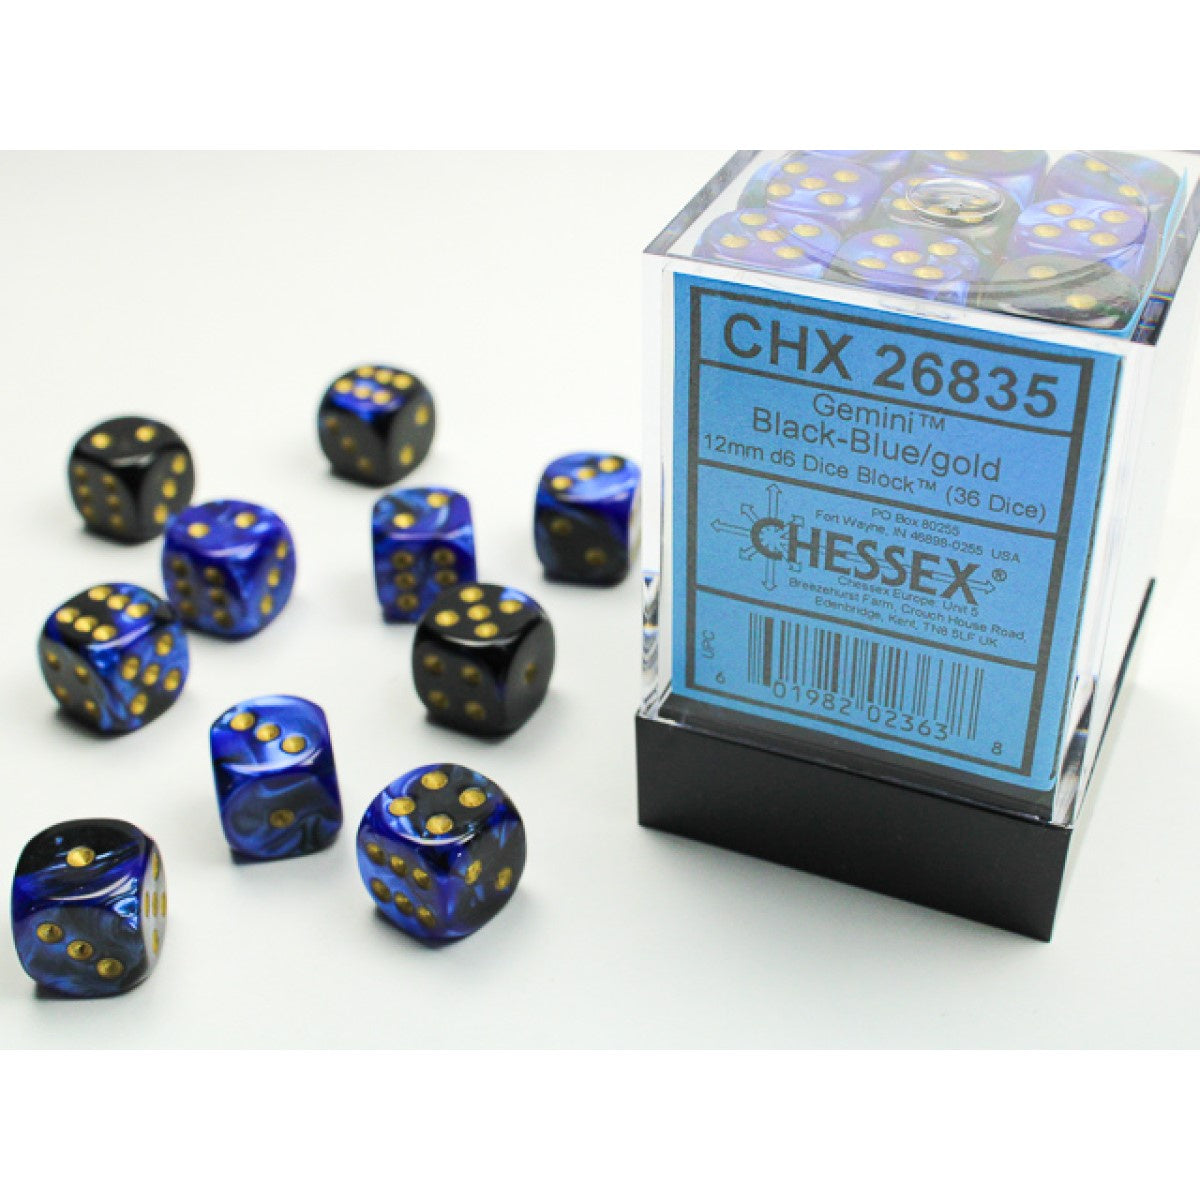 CHESSEX 12mm D6 DICE BLOCK (36 DICE) GEMINI BLACK/BLUE WITH GOLD